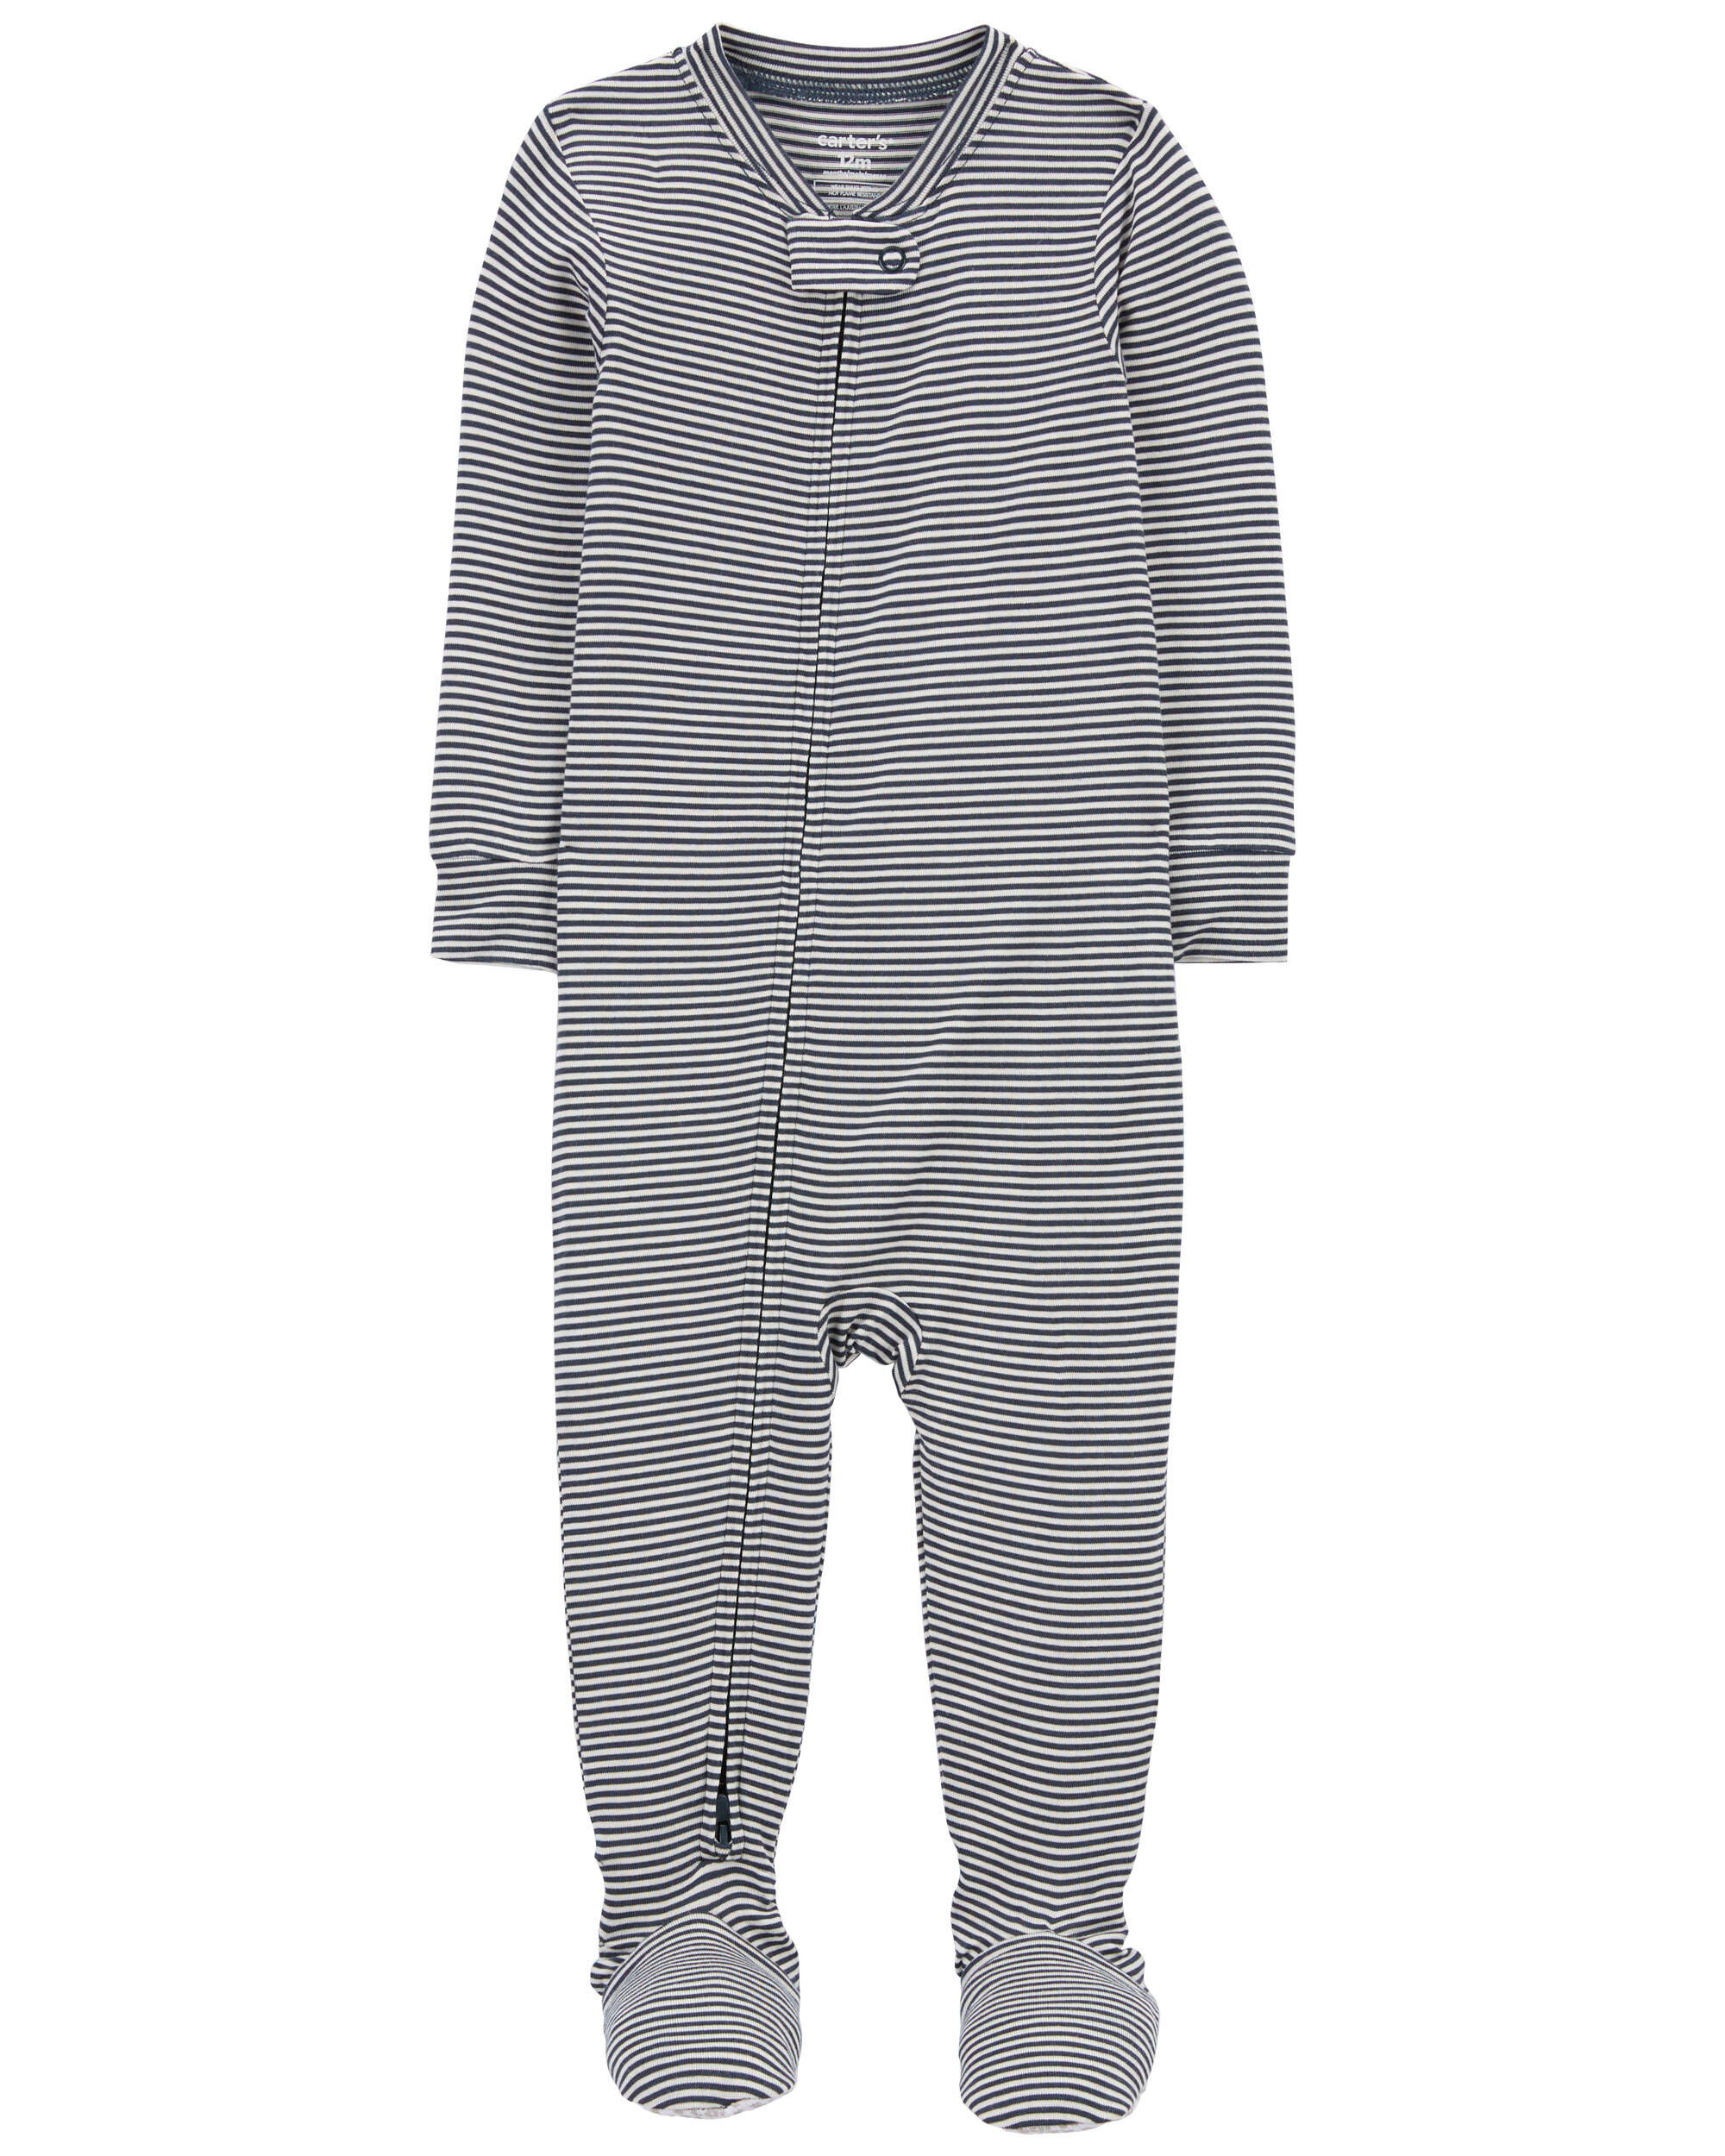 Toddler 1-Piece Striped PurelySoft Footie Pyjamas